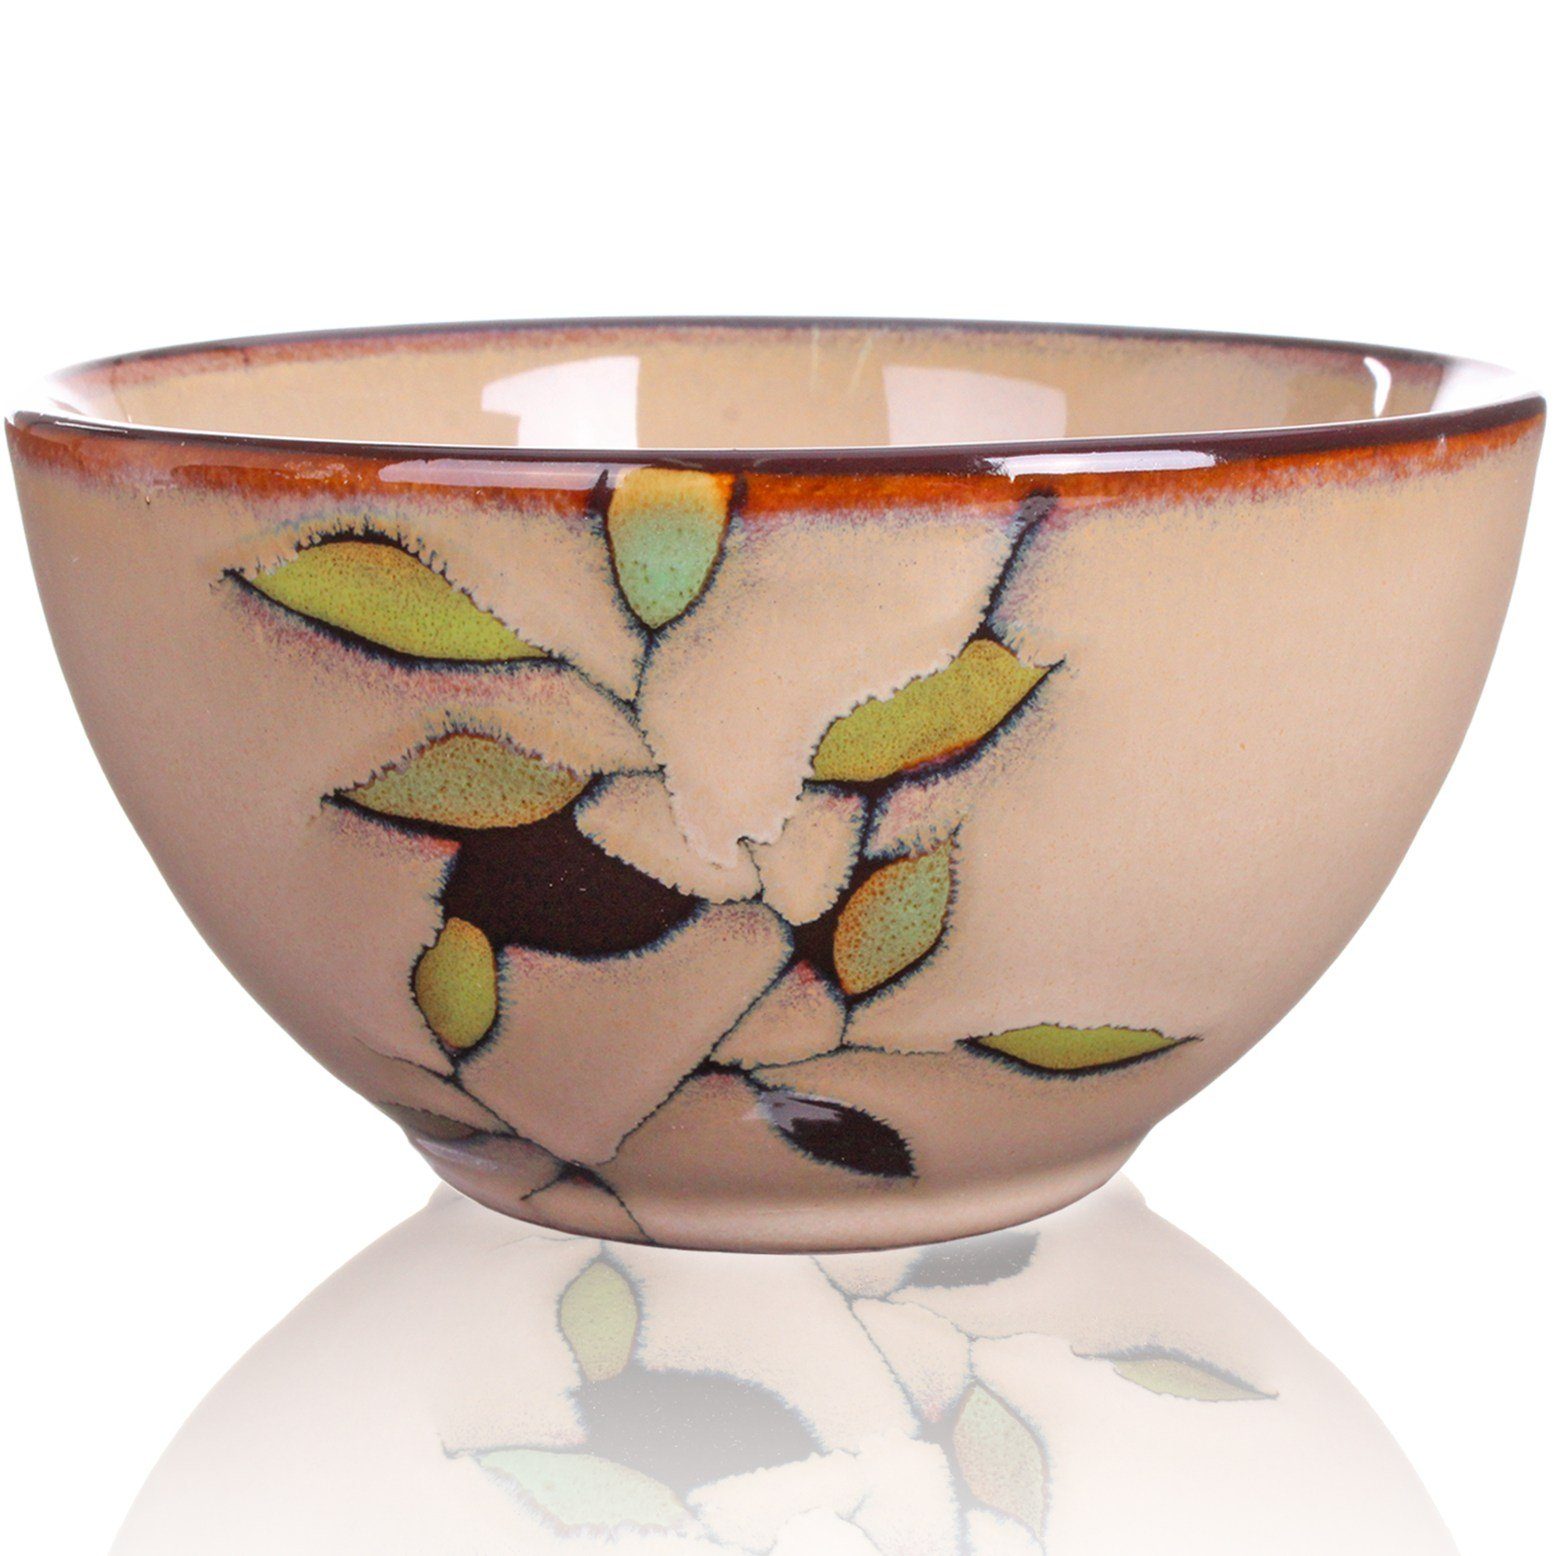 Teezeremonie Set mit Goodwei "Bamboo" Teeschale, und Besenhalter (4-tlg), Besen Teeservice Matcha Keramik